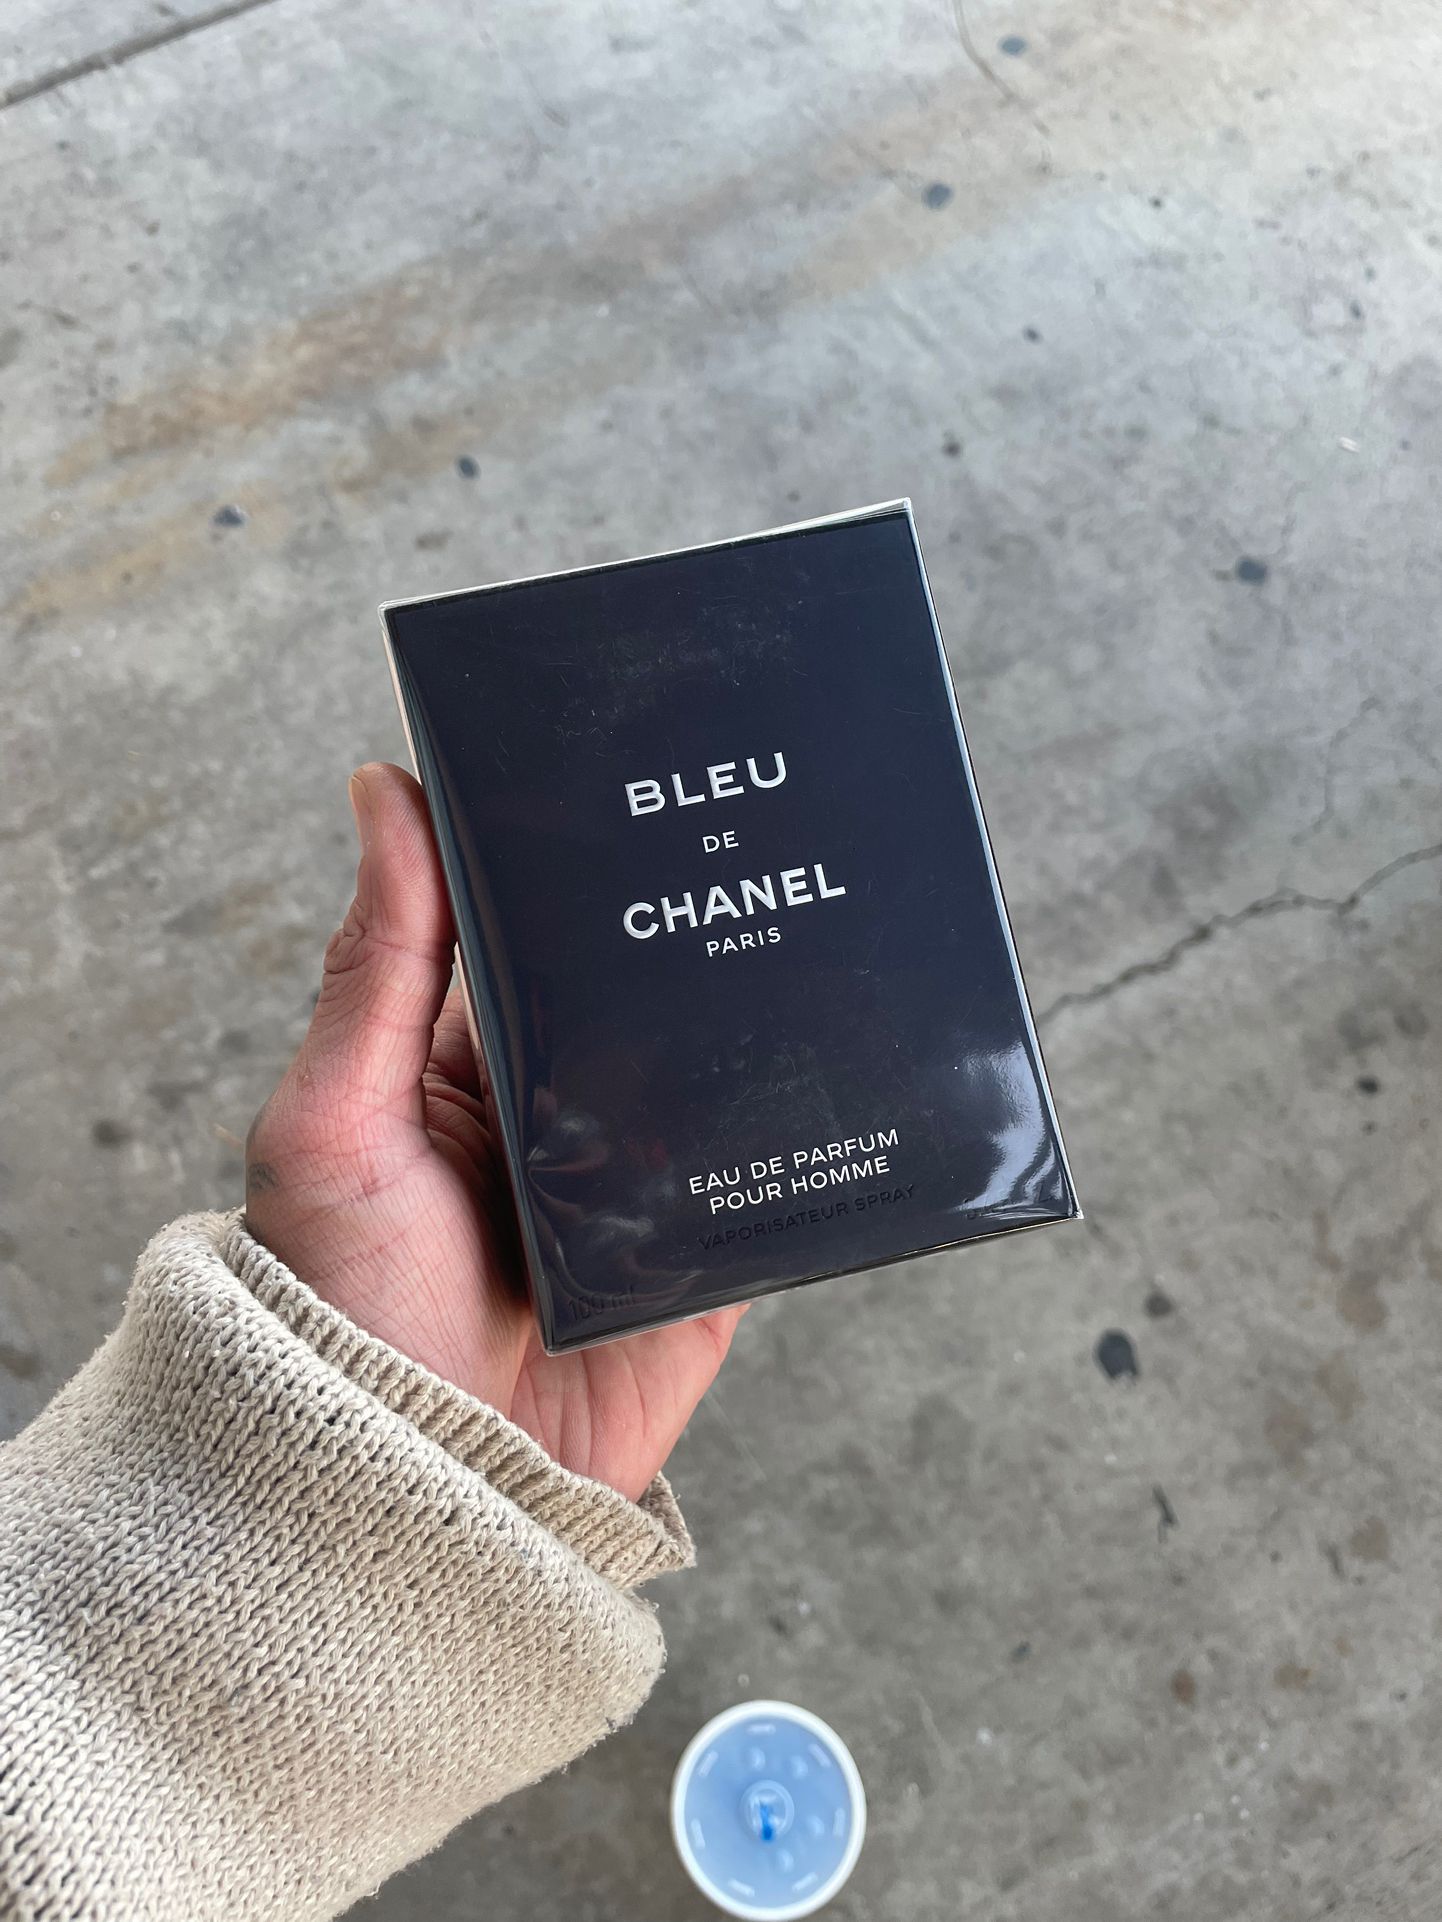 Chanel Bleu De Chanel PARFUM Spray Men 3.4 Oz / 100ml Brand NEW SEALED  AUTHENTIC